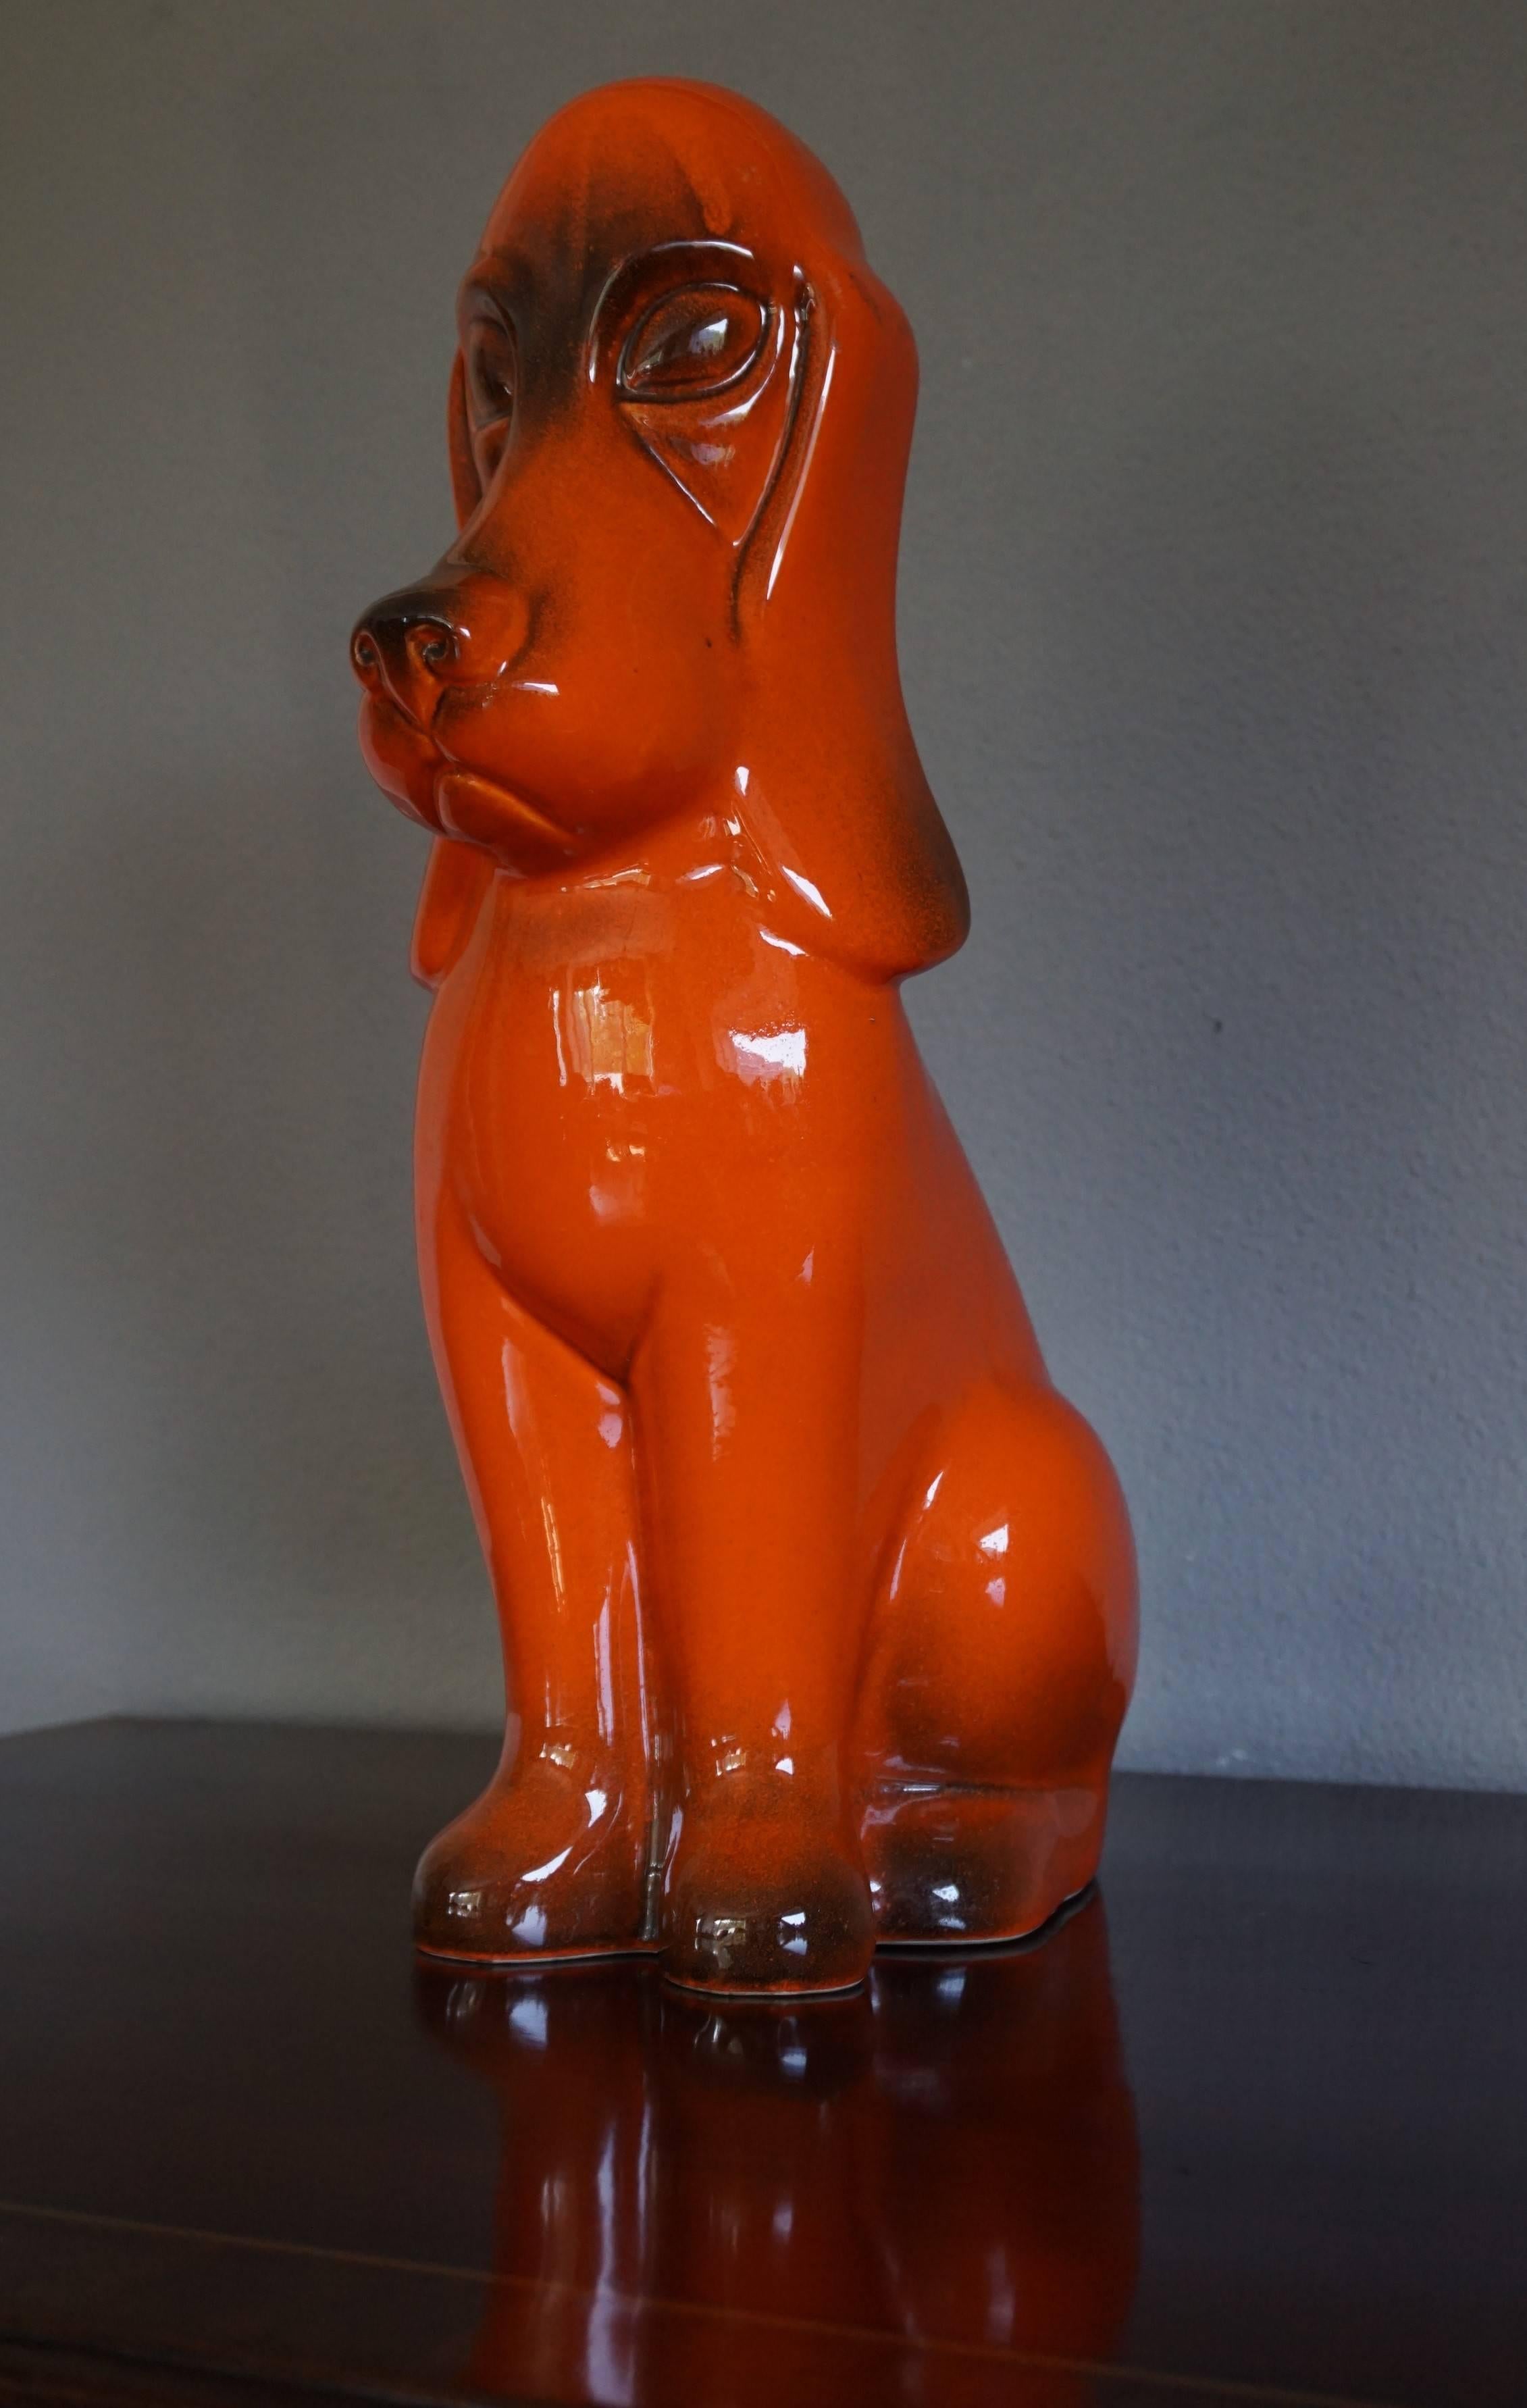 vintage orange dog lamp